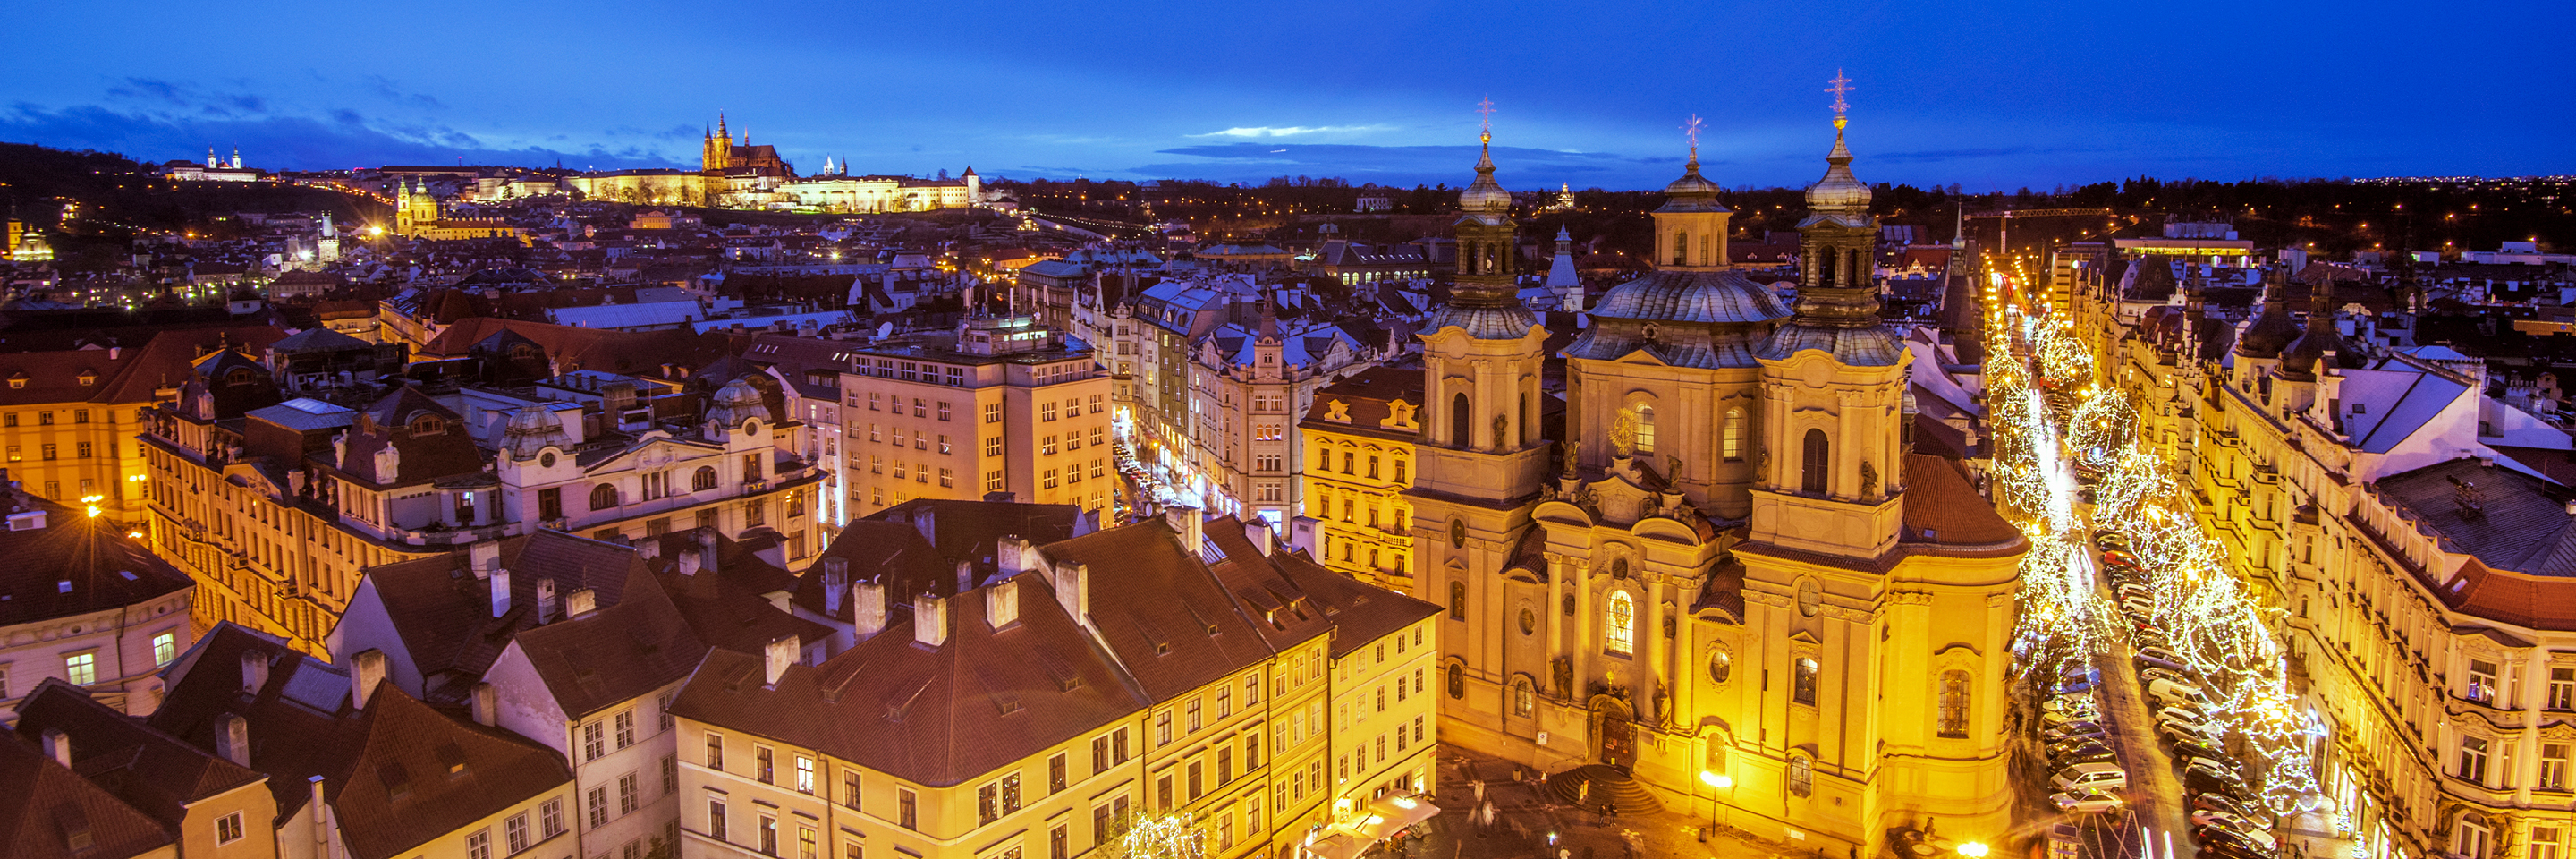 Festive Season on the Legendary Danube with 2 nights in Prague